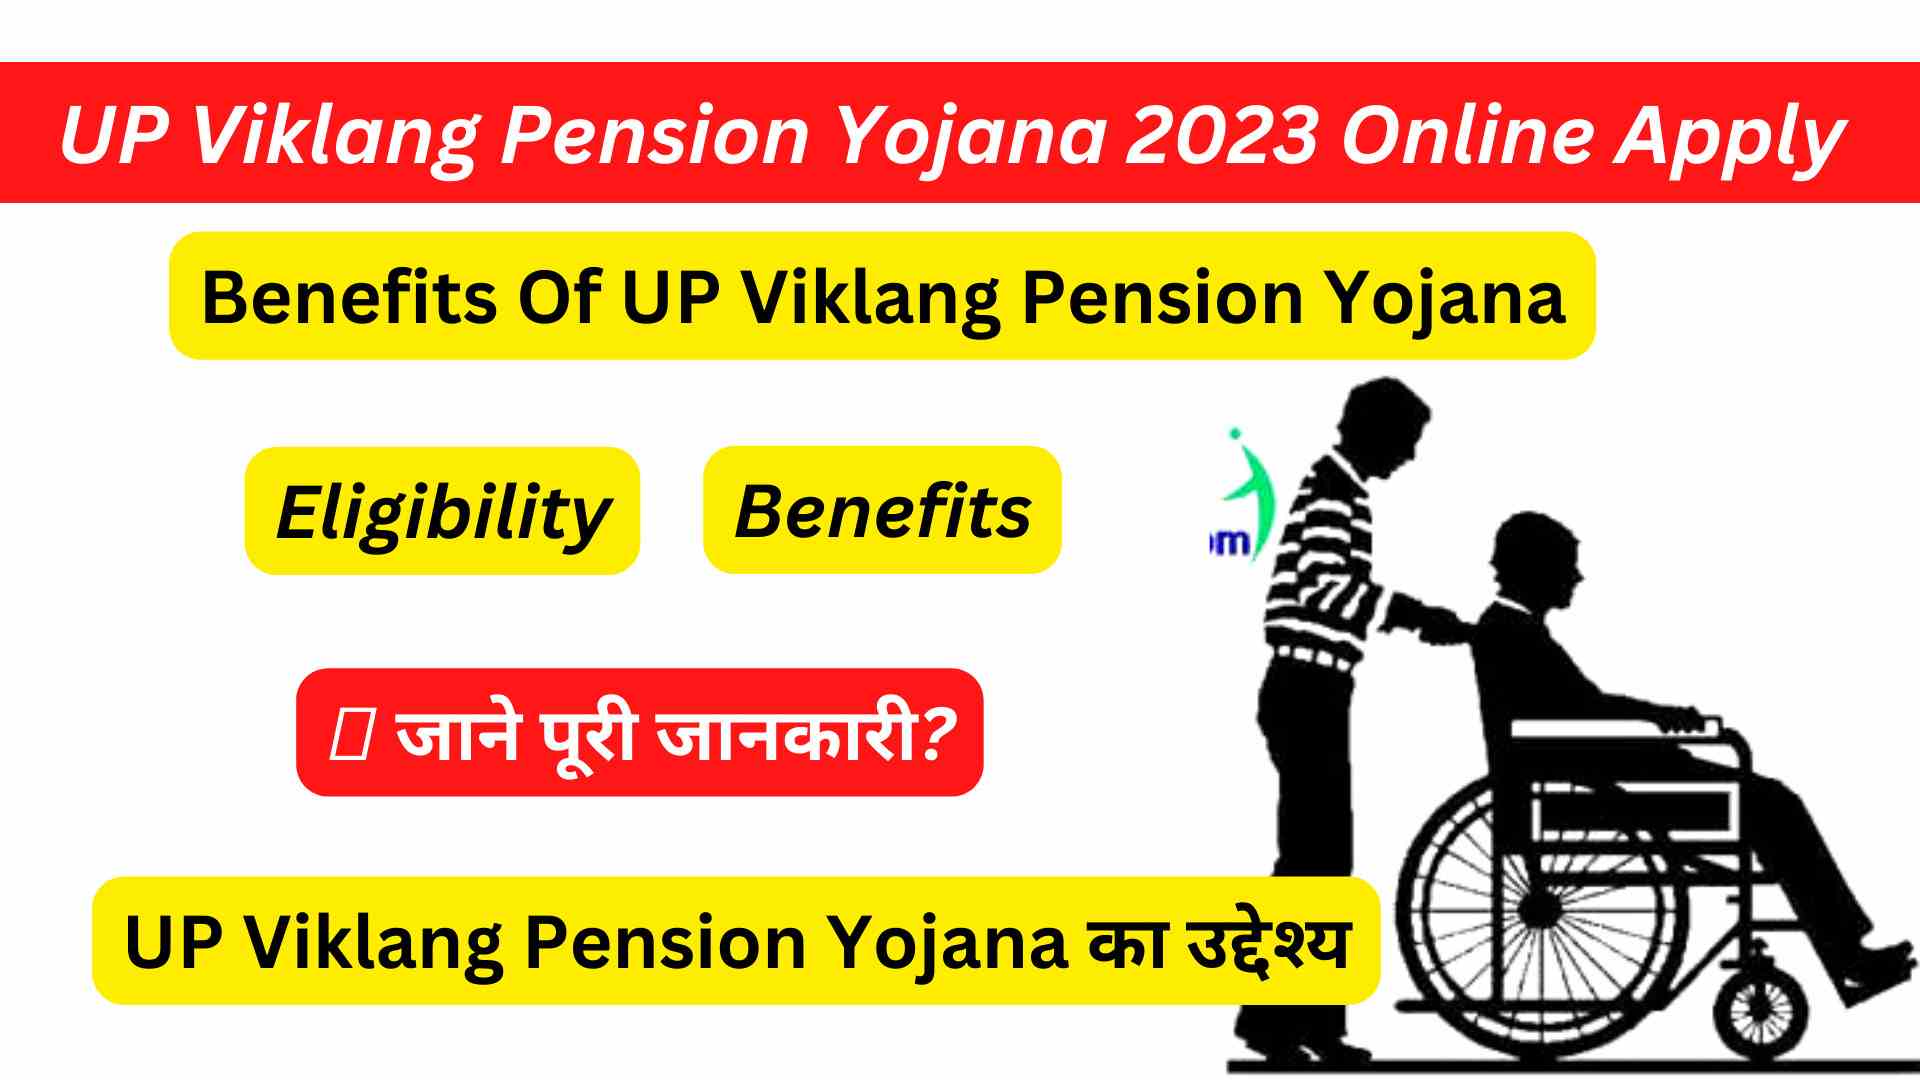 UP Viklang Pension Yojana 2023 Online Apply